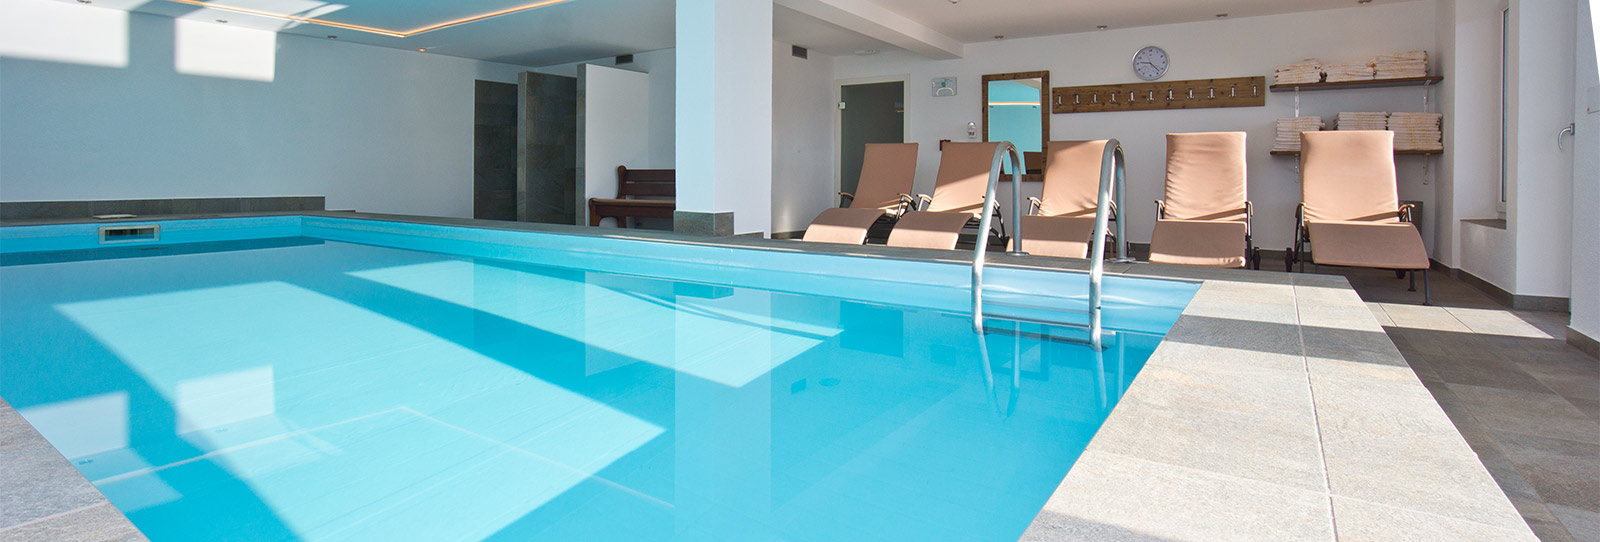 Swimming pool - Hotel Oberlechner